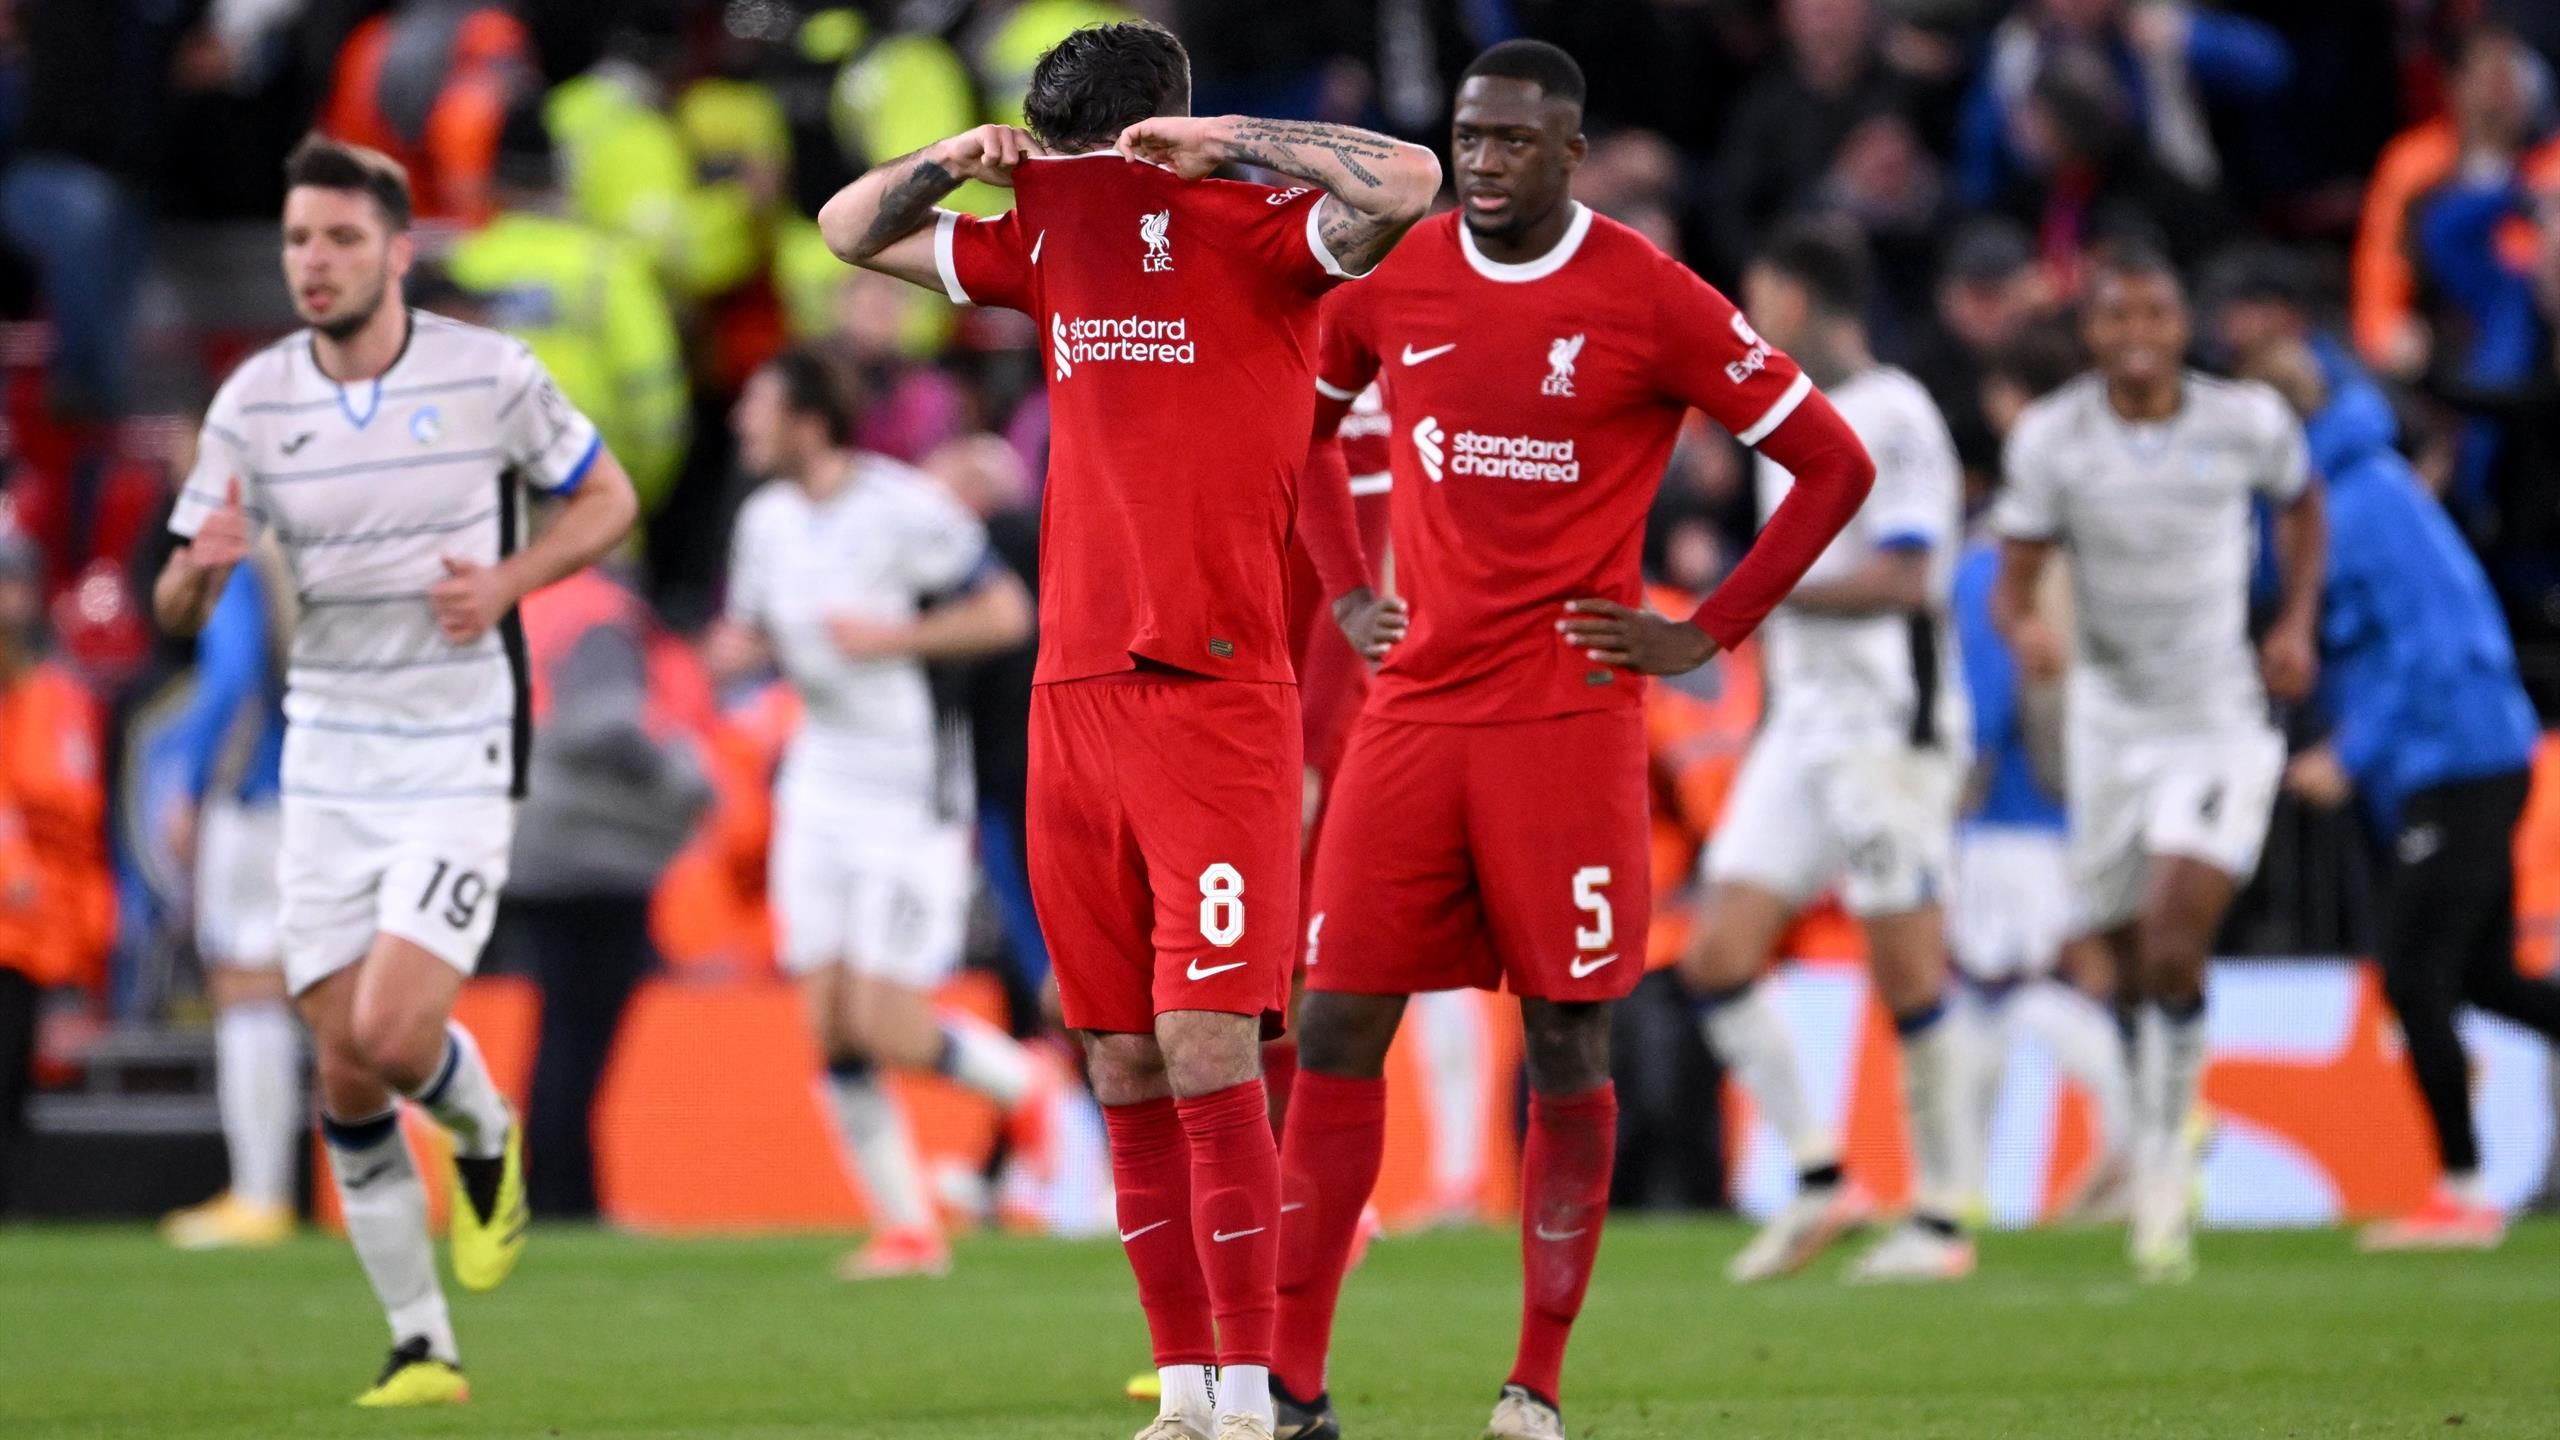 Europa League: FC Liverpool erlebt Debakel und geht zuhause gegen Atalanta Bergamo unter - Aus droht - Eurosport